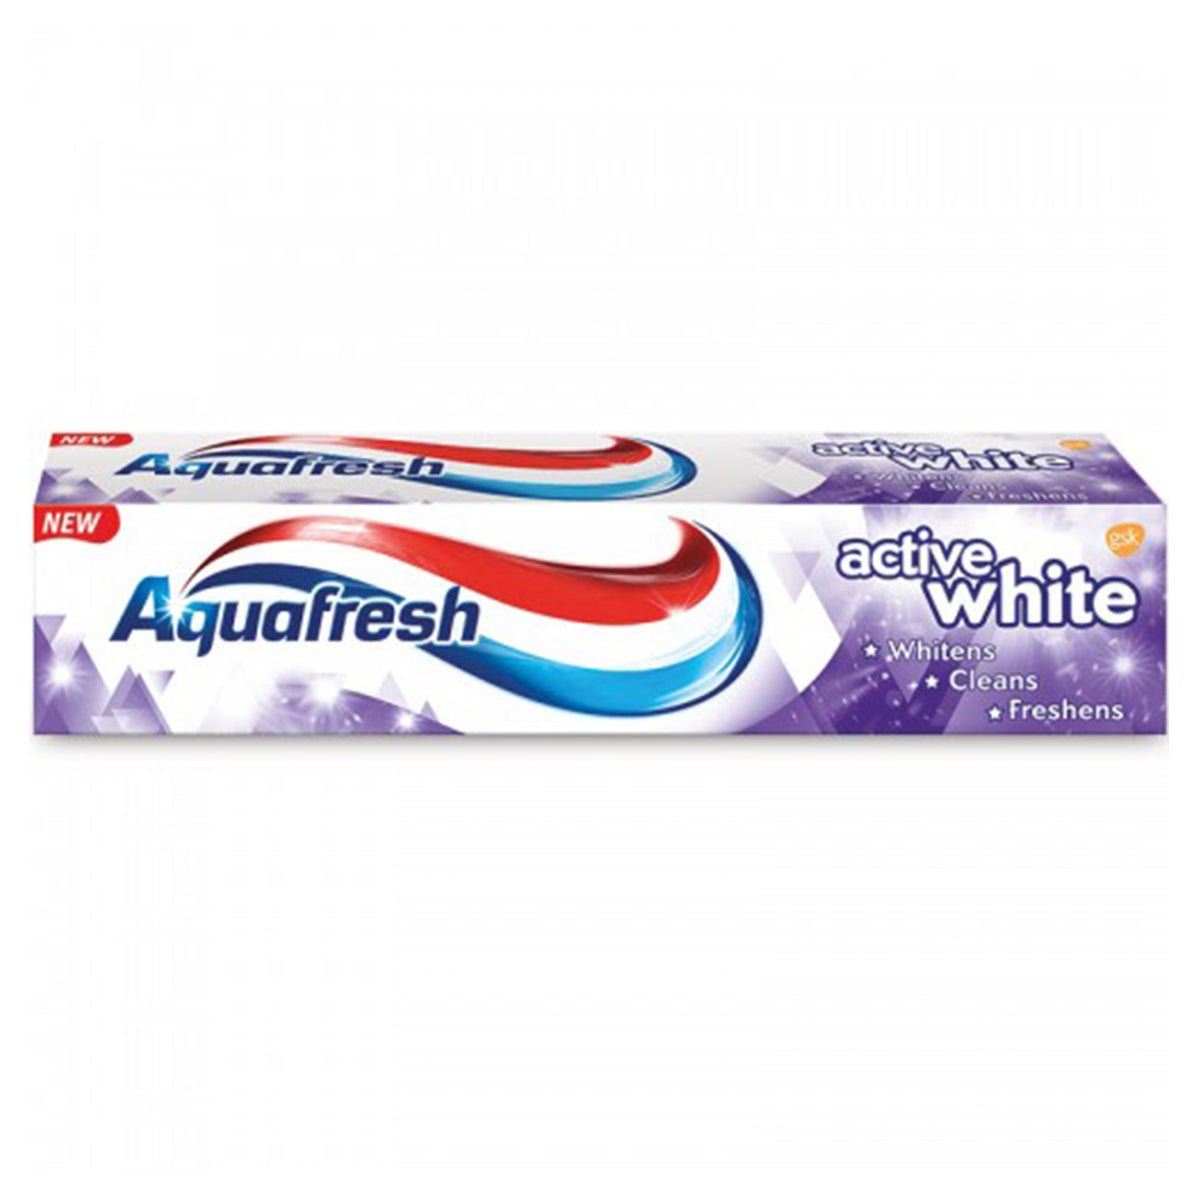 Aquafresh active white toothpaste.